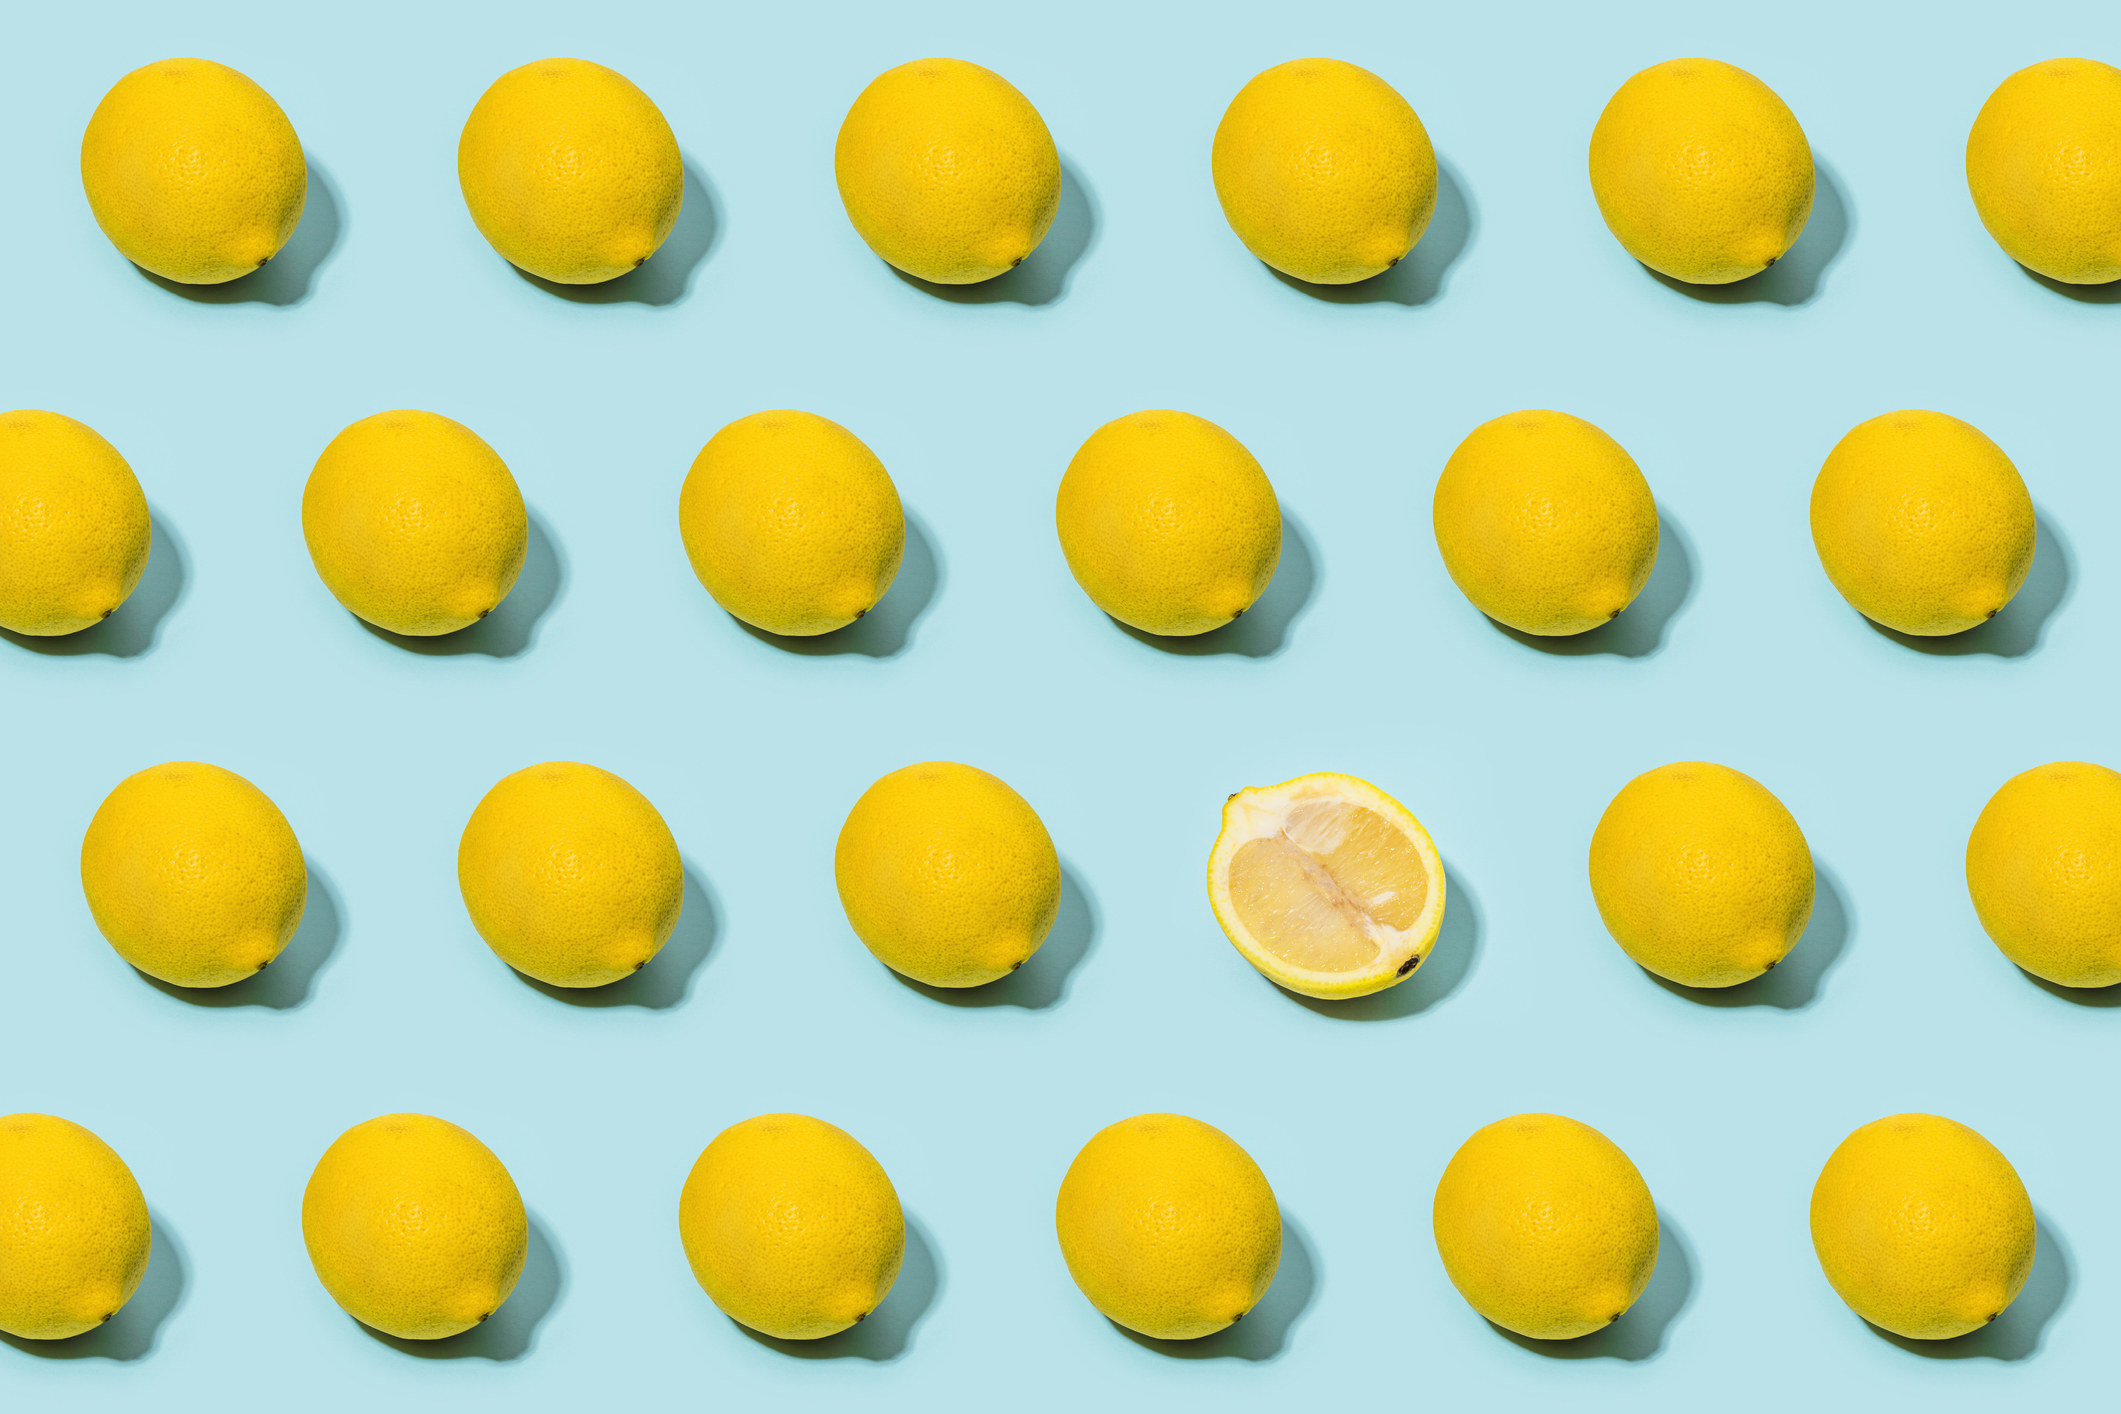 Many lemons